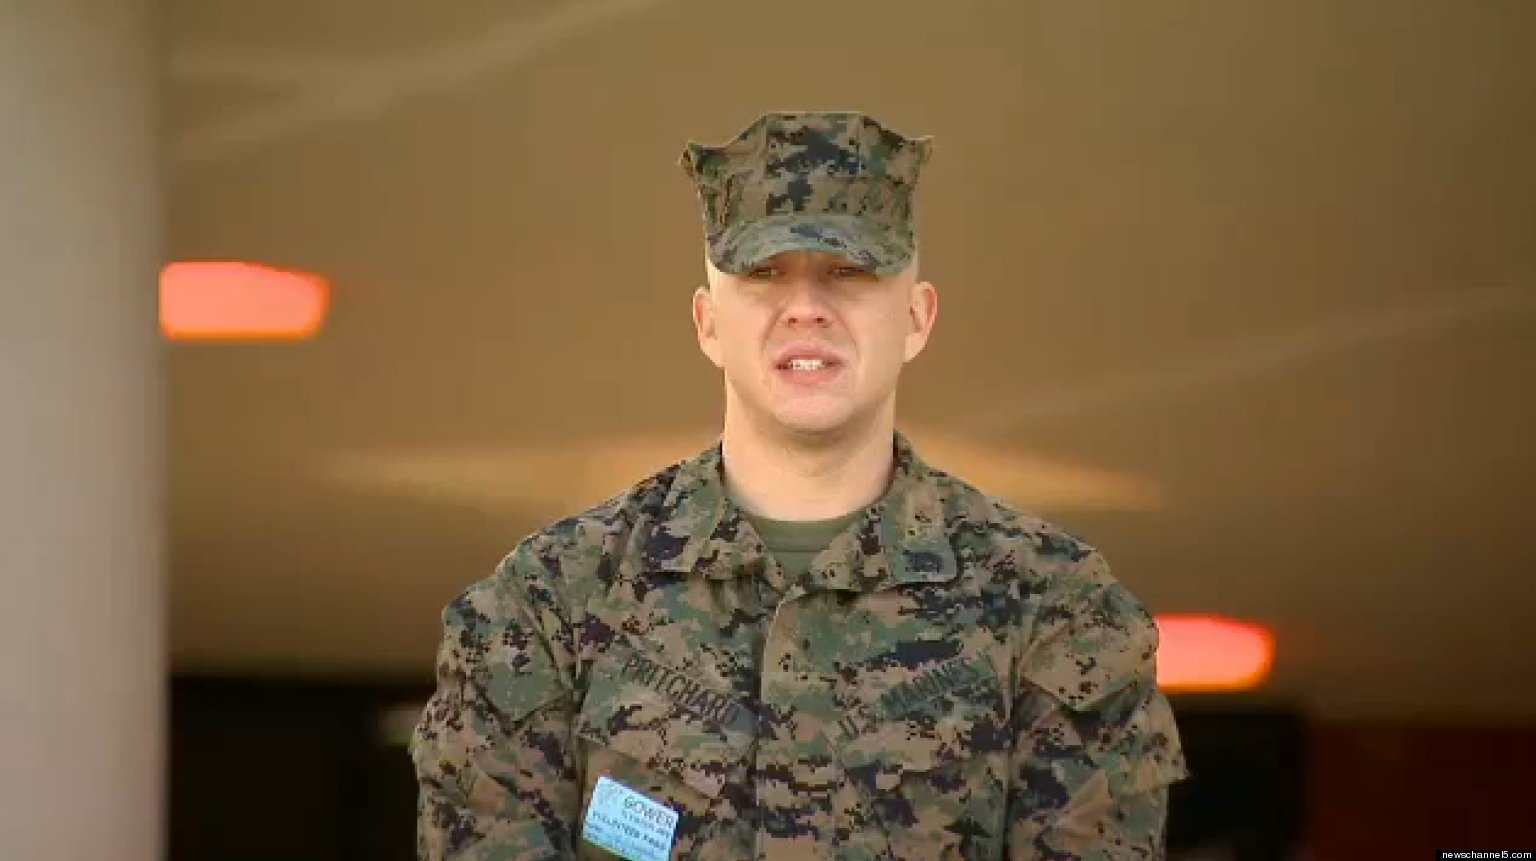 Ex-Marine dad stands guard at school after Newtown - CBS News